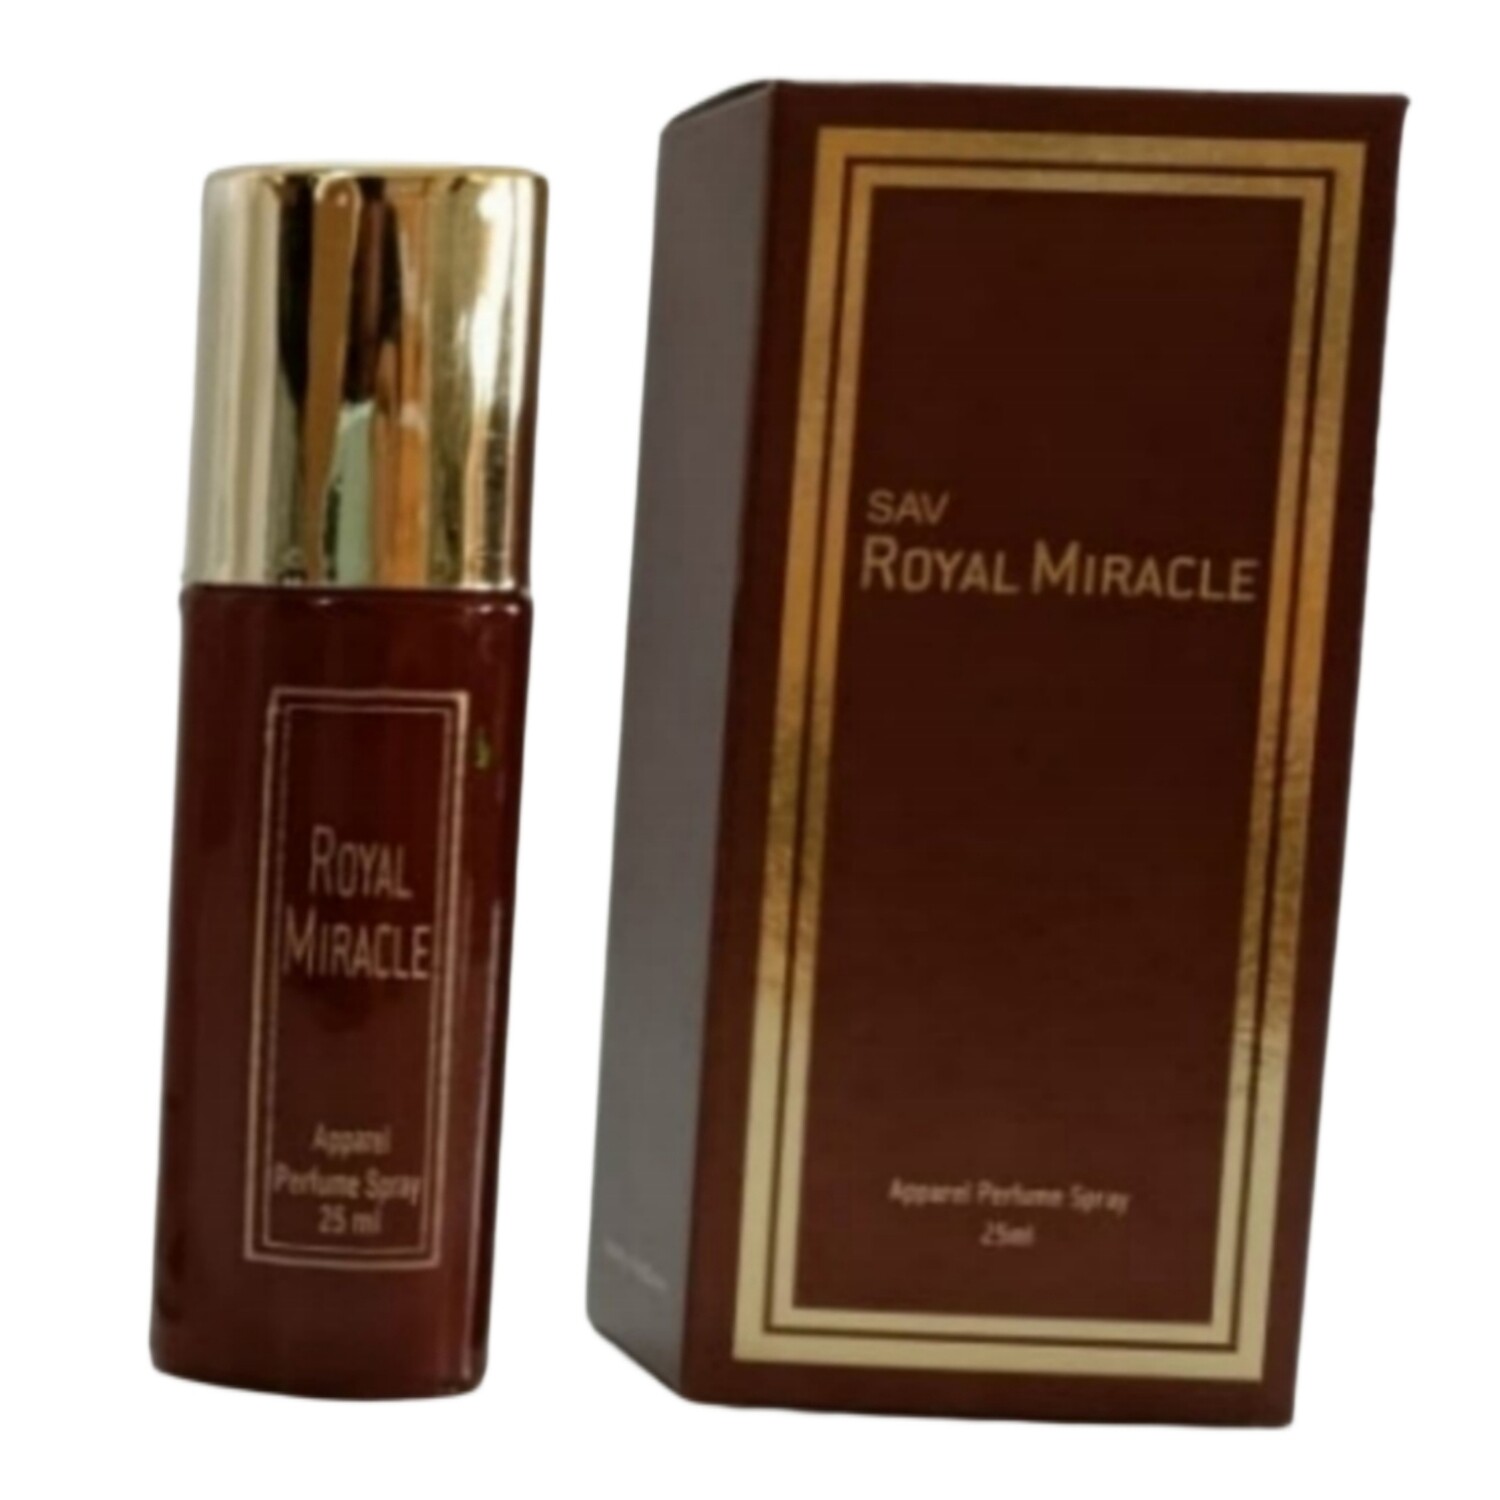 SAV Royal Miracle Apparel Perfume Spray 25 ml